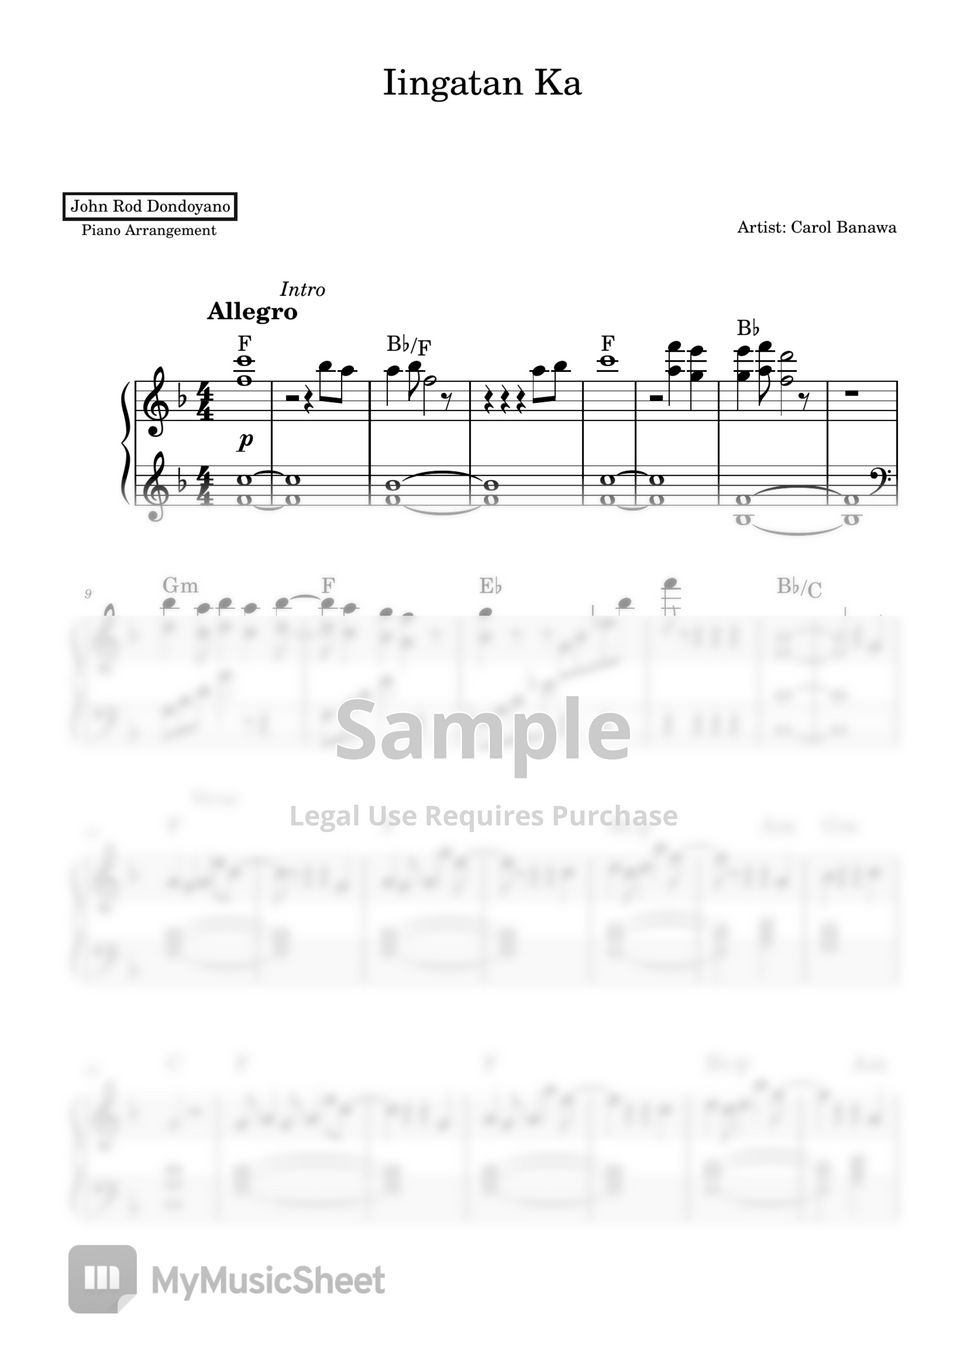 Carol Banawa - Iingatan Ka (EASY Piano Sheet) by John Rod Dondoyano